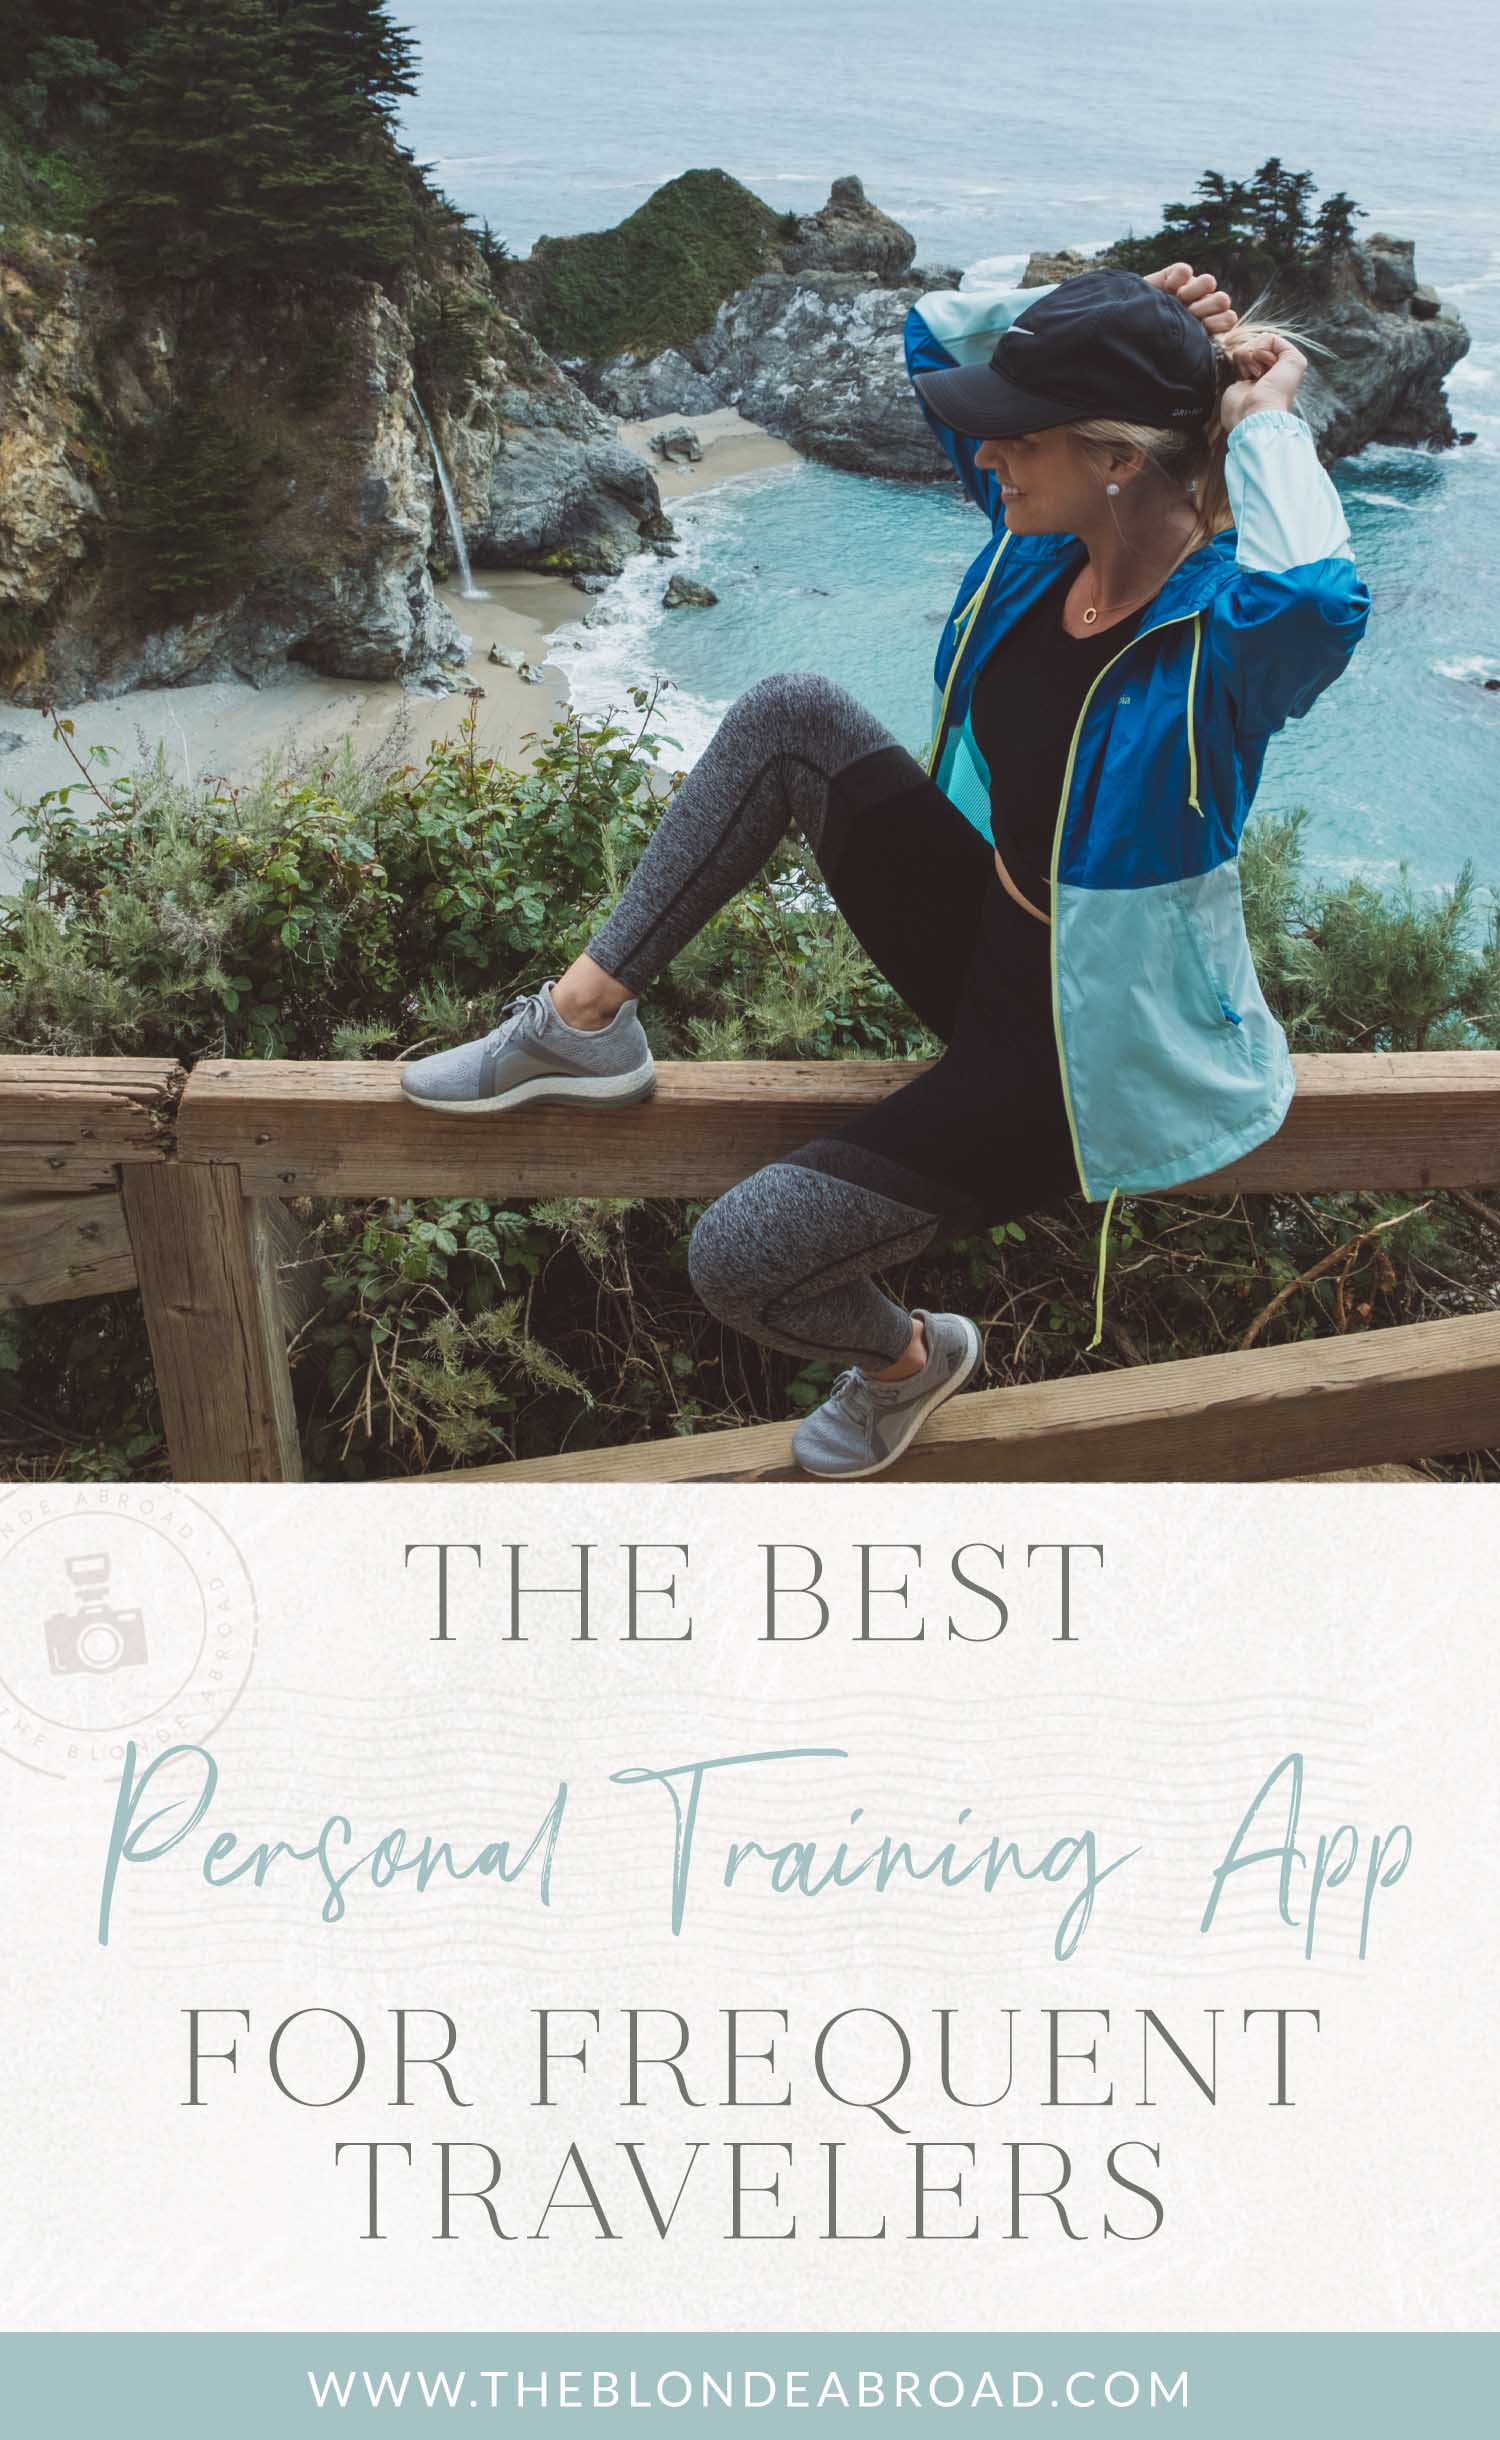 Best Personal Training App